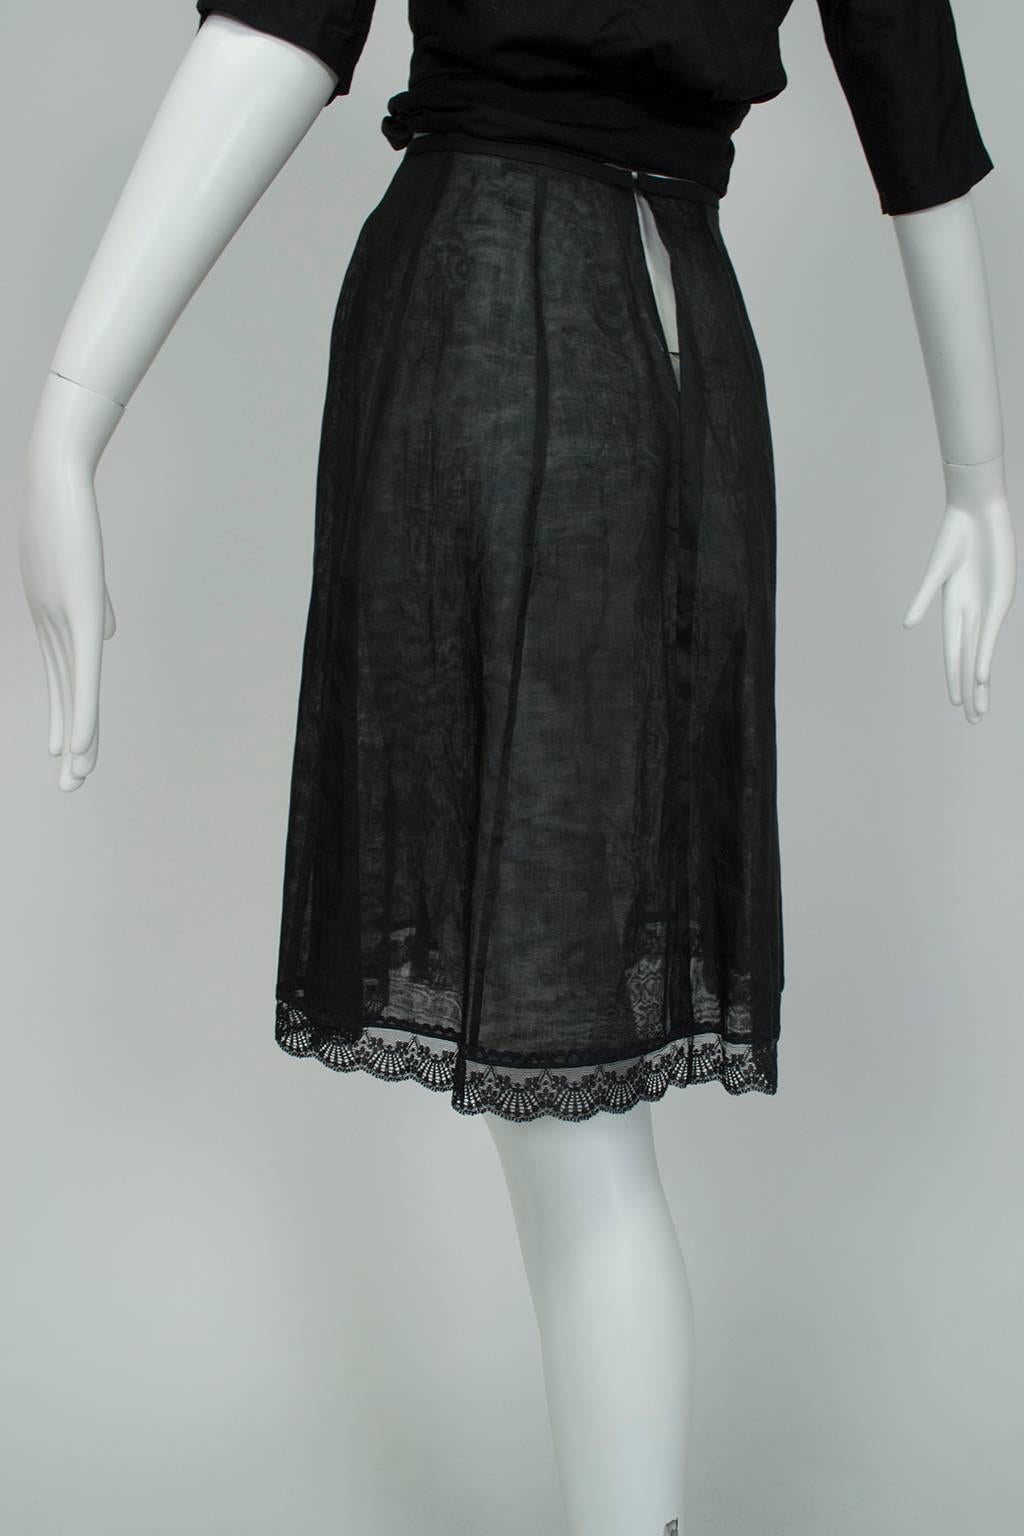 New Jacques Fath Paris Sheer Black Demi-Couture Linen Lingerie Skirt - M, 1990s In New Condition For Sale In Tucson, AZ